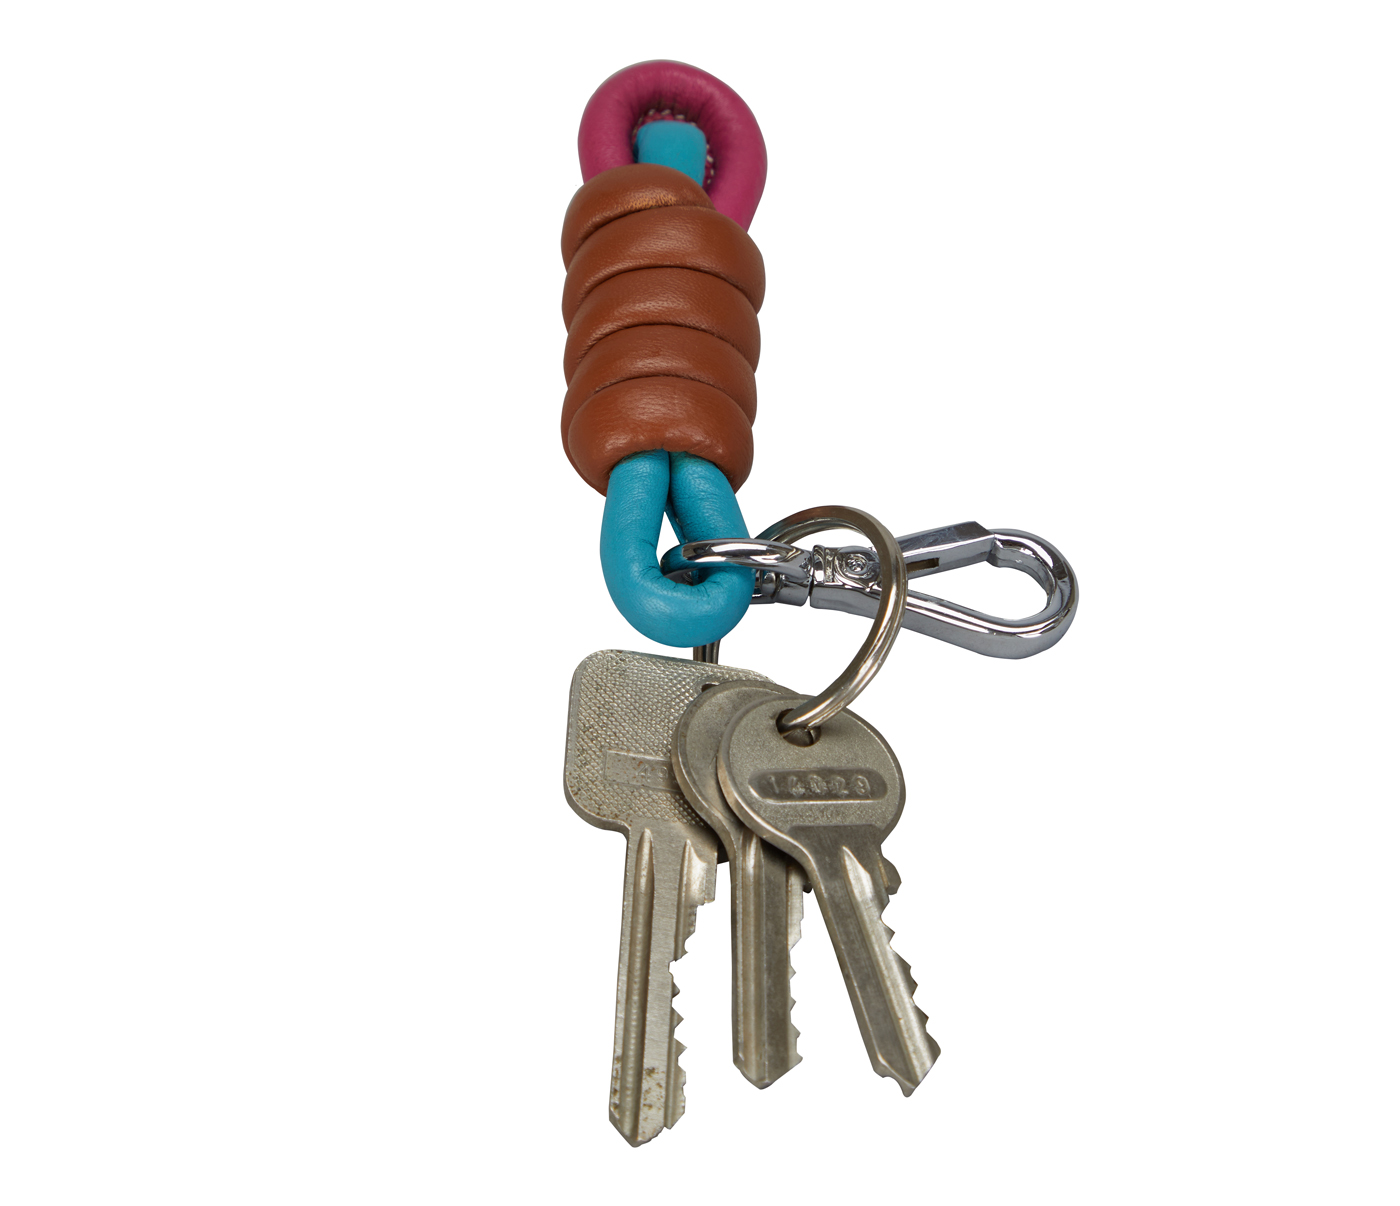 W276--Key chain holder in Genuine Leather - Tan